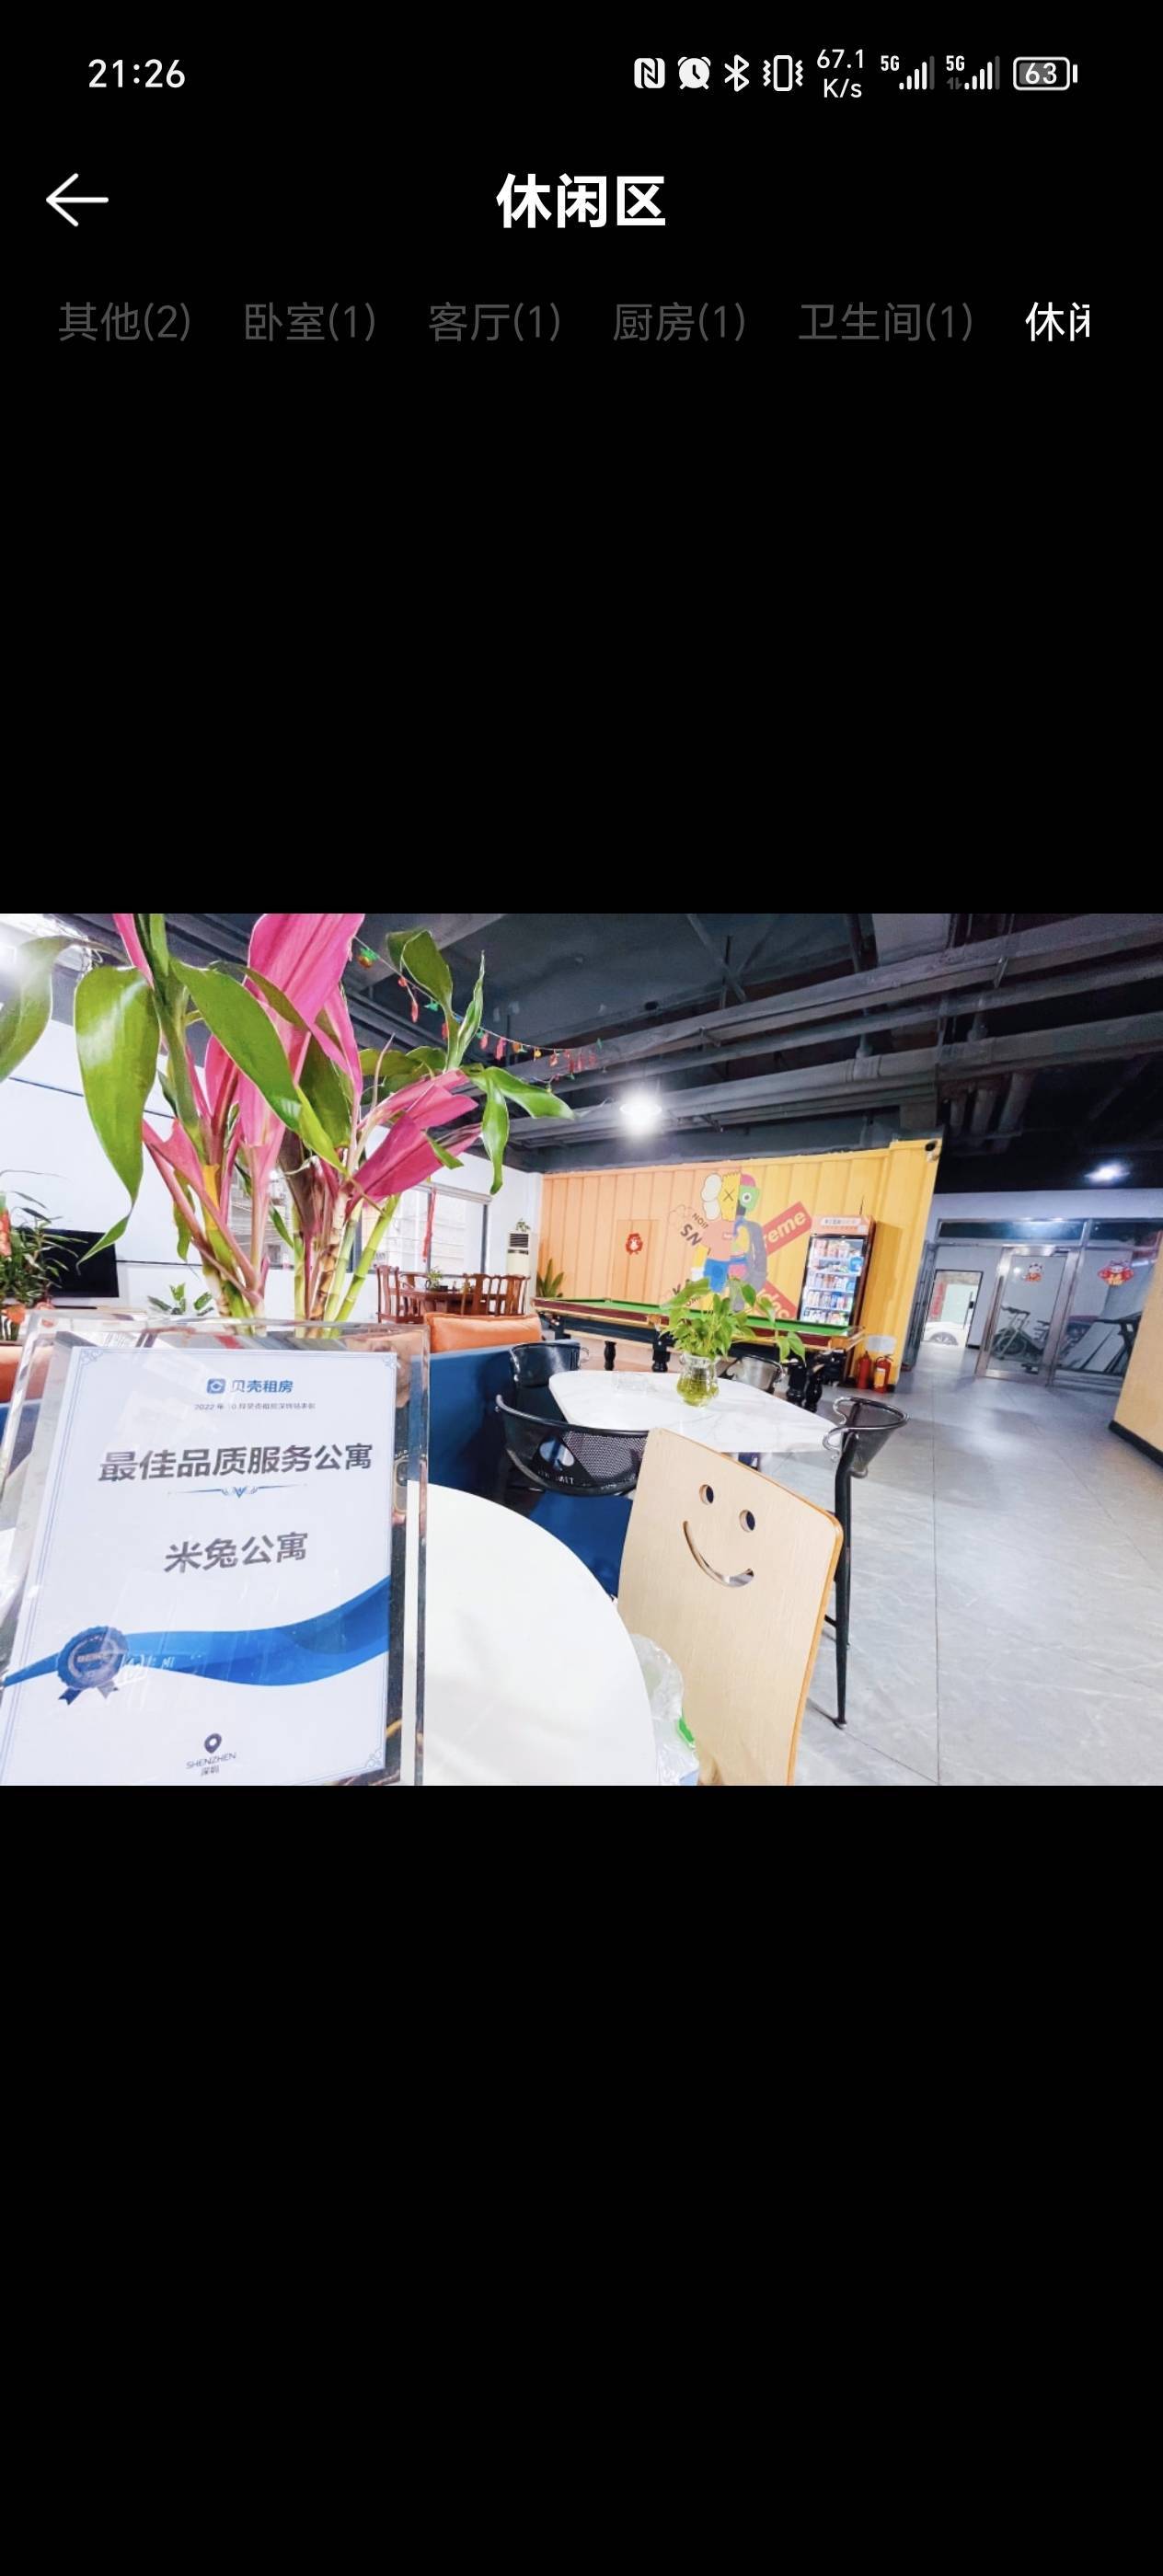 Shenzhen-Longgang-Cozy Home,Clean&Comfy,No Gender Limit,Hustle & Bustle,“Friends”,Chilled,LGBTQ Friendly,Pet Friendly